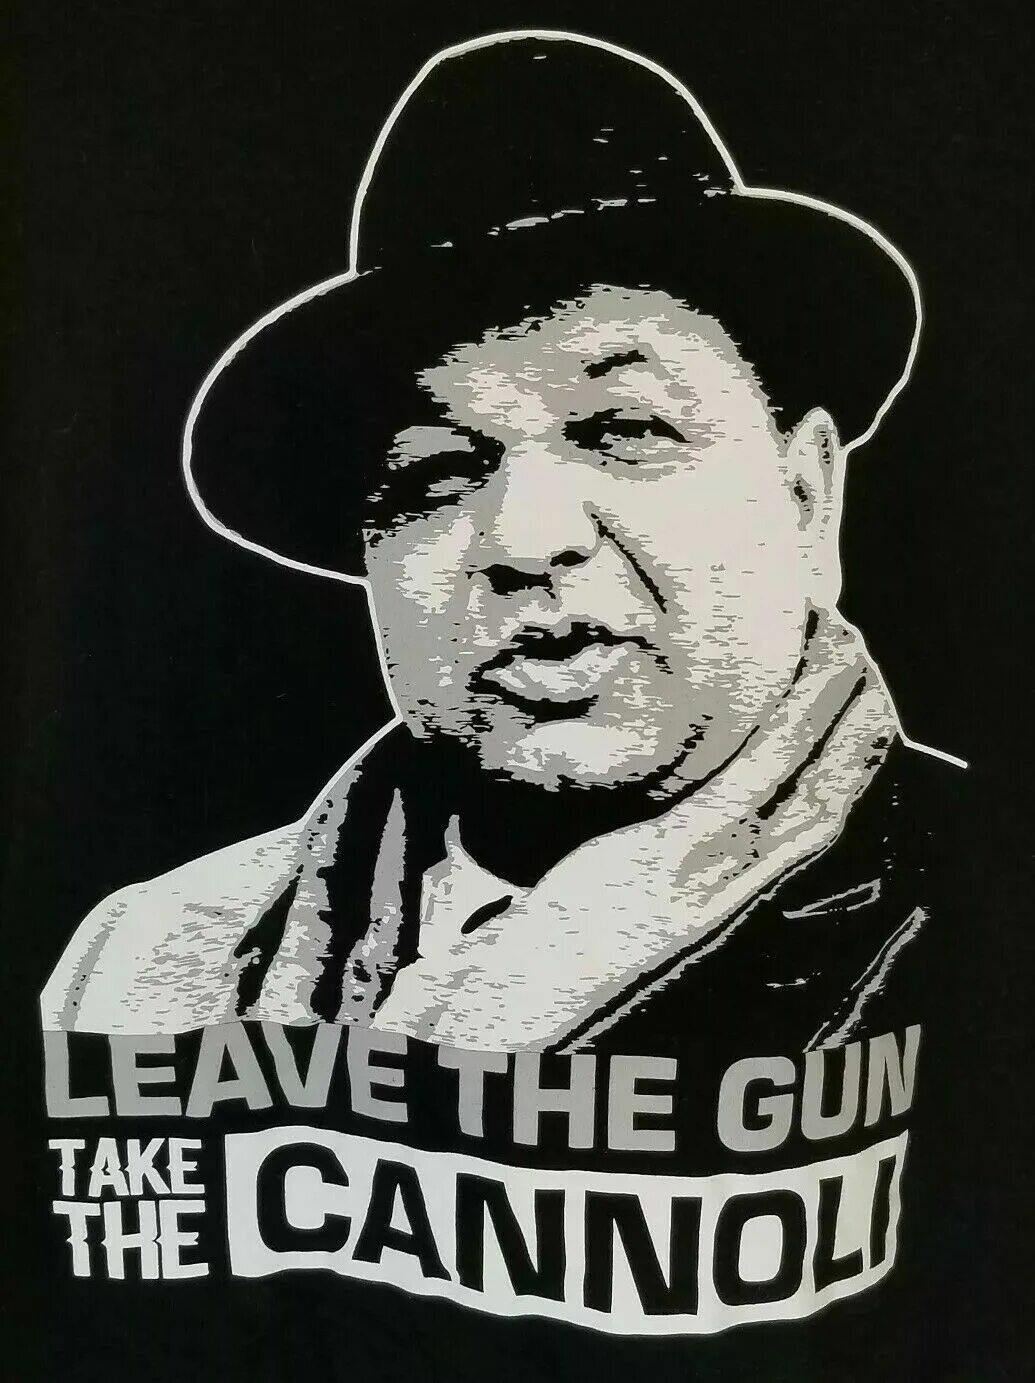 Take gun. Leave the Gun take the Cannoli.